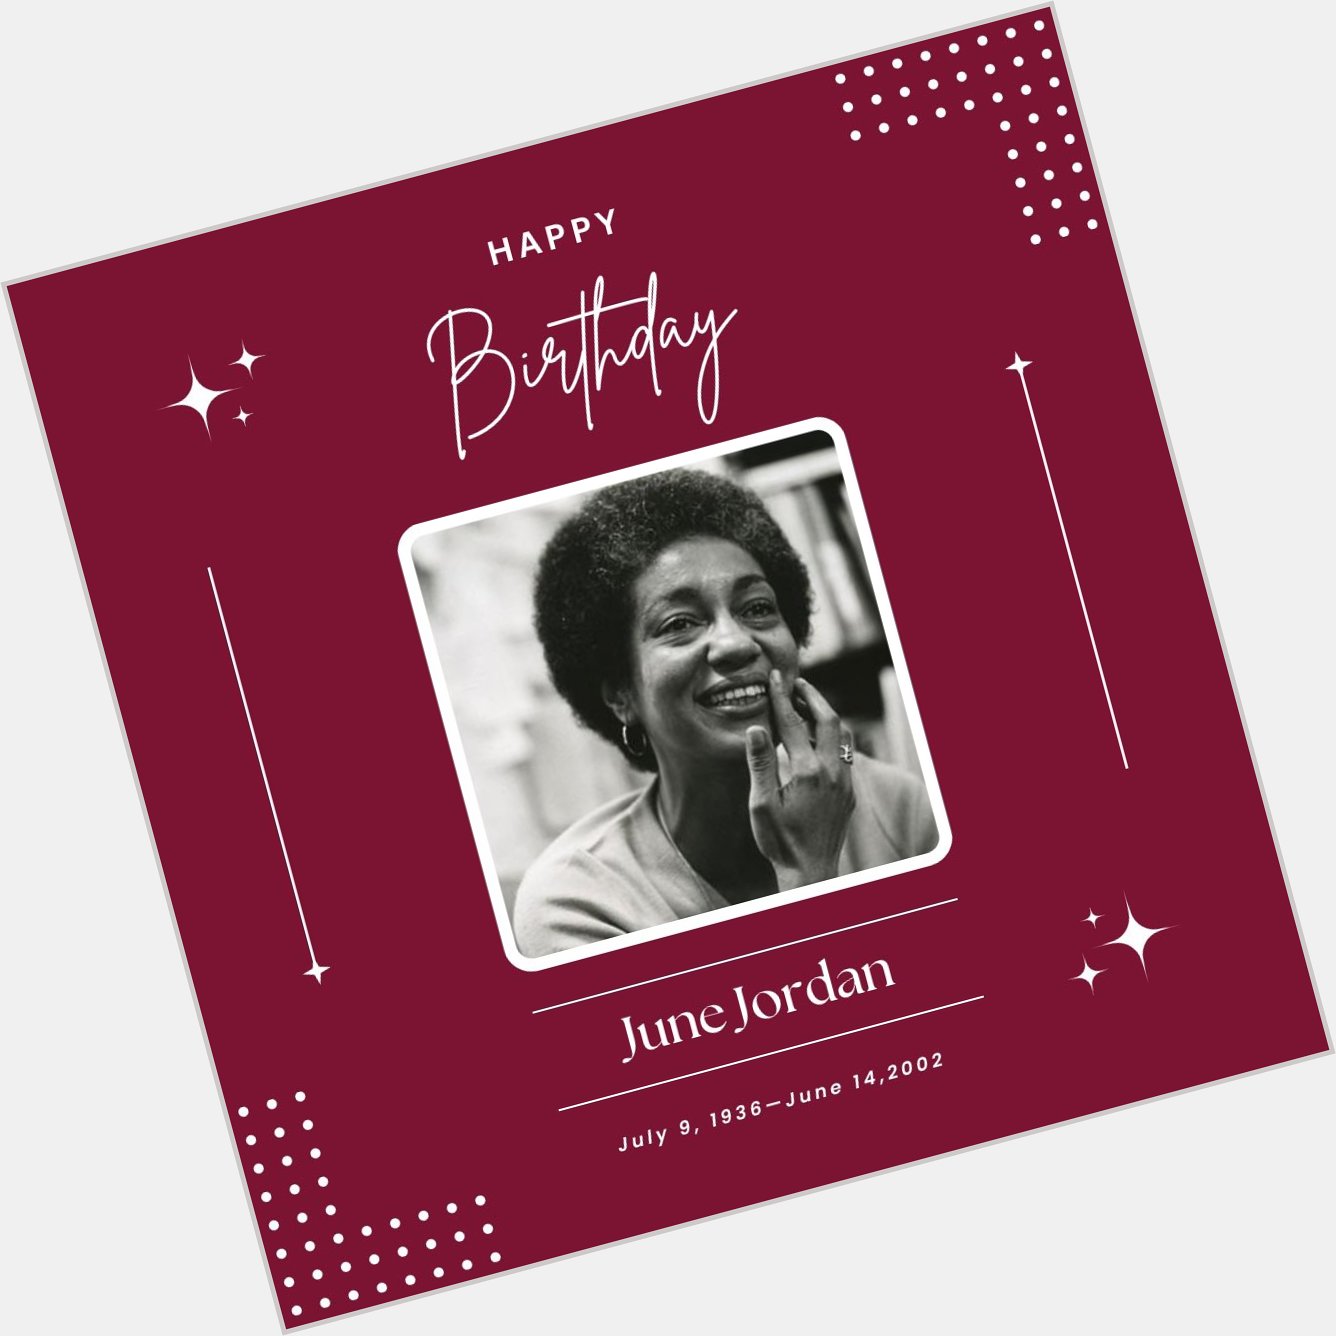 Happy birthday, June Jordan! Grateful for her pen and revolutionary blueprint. 